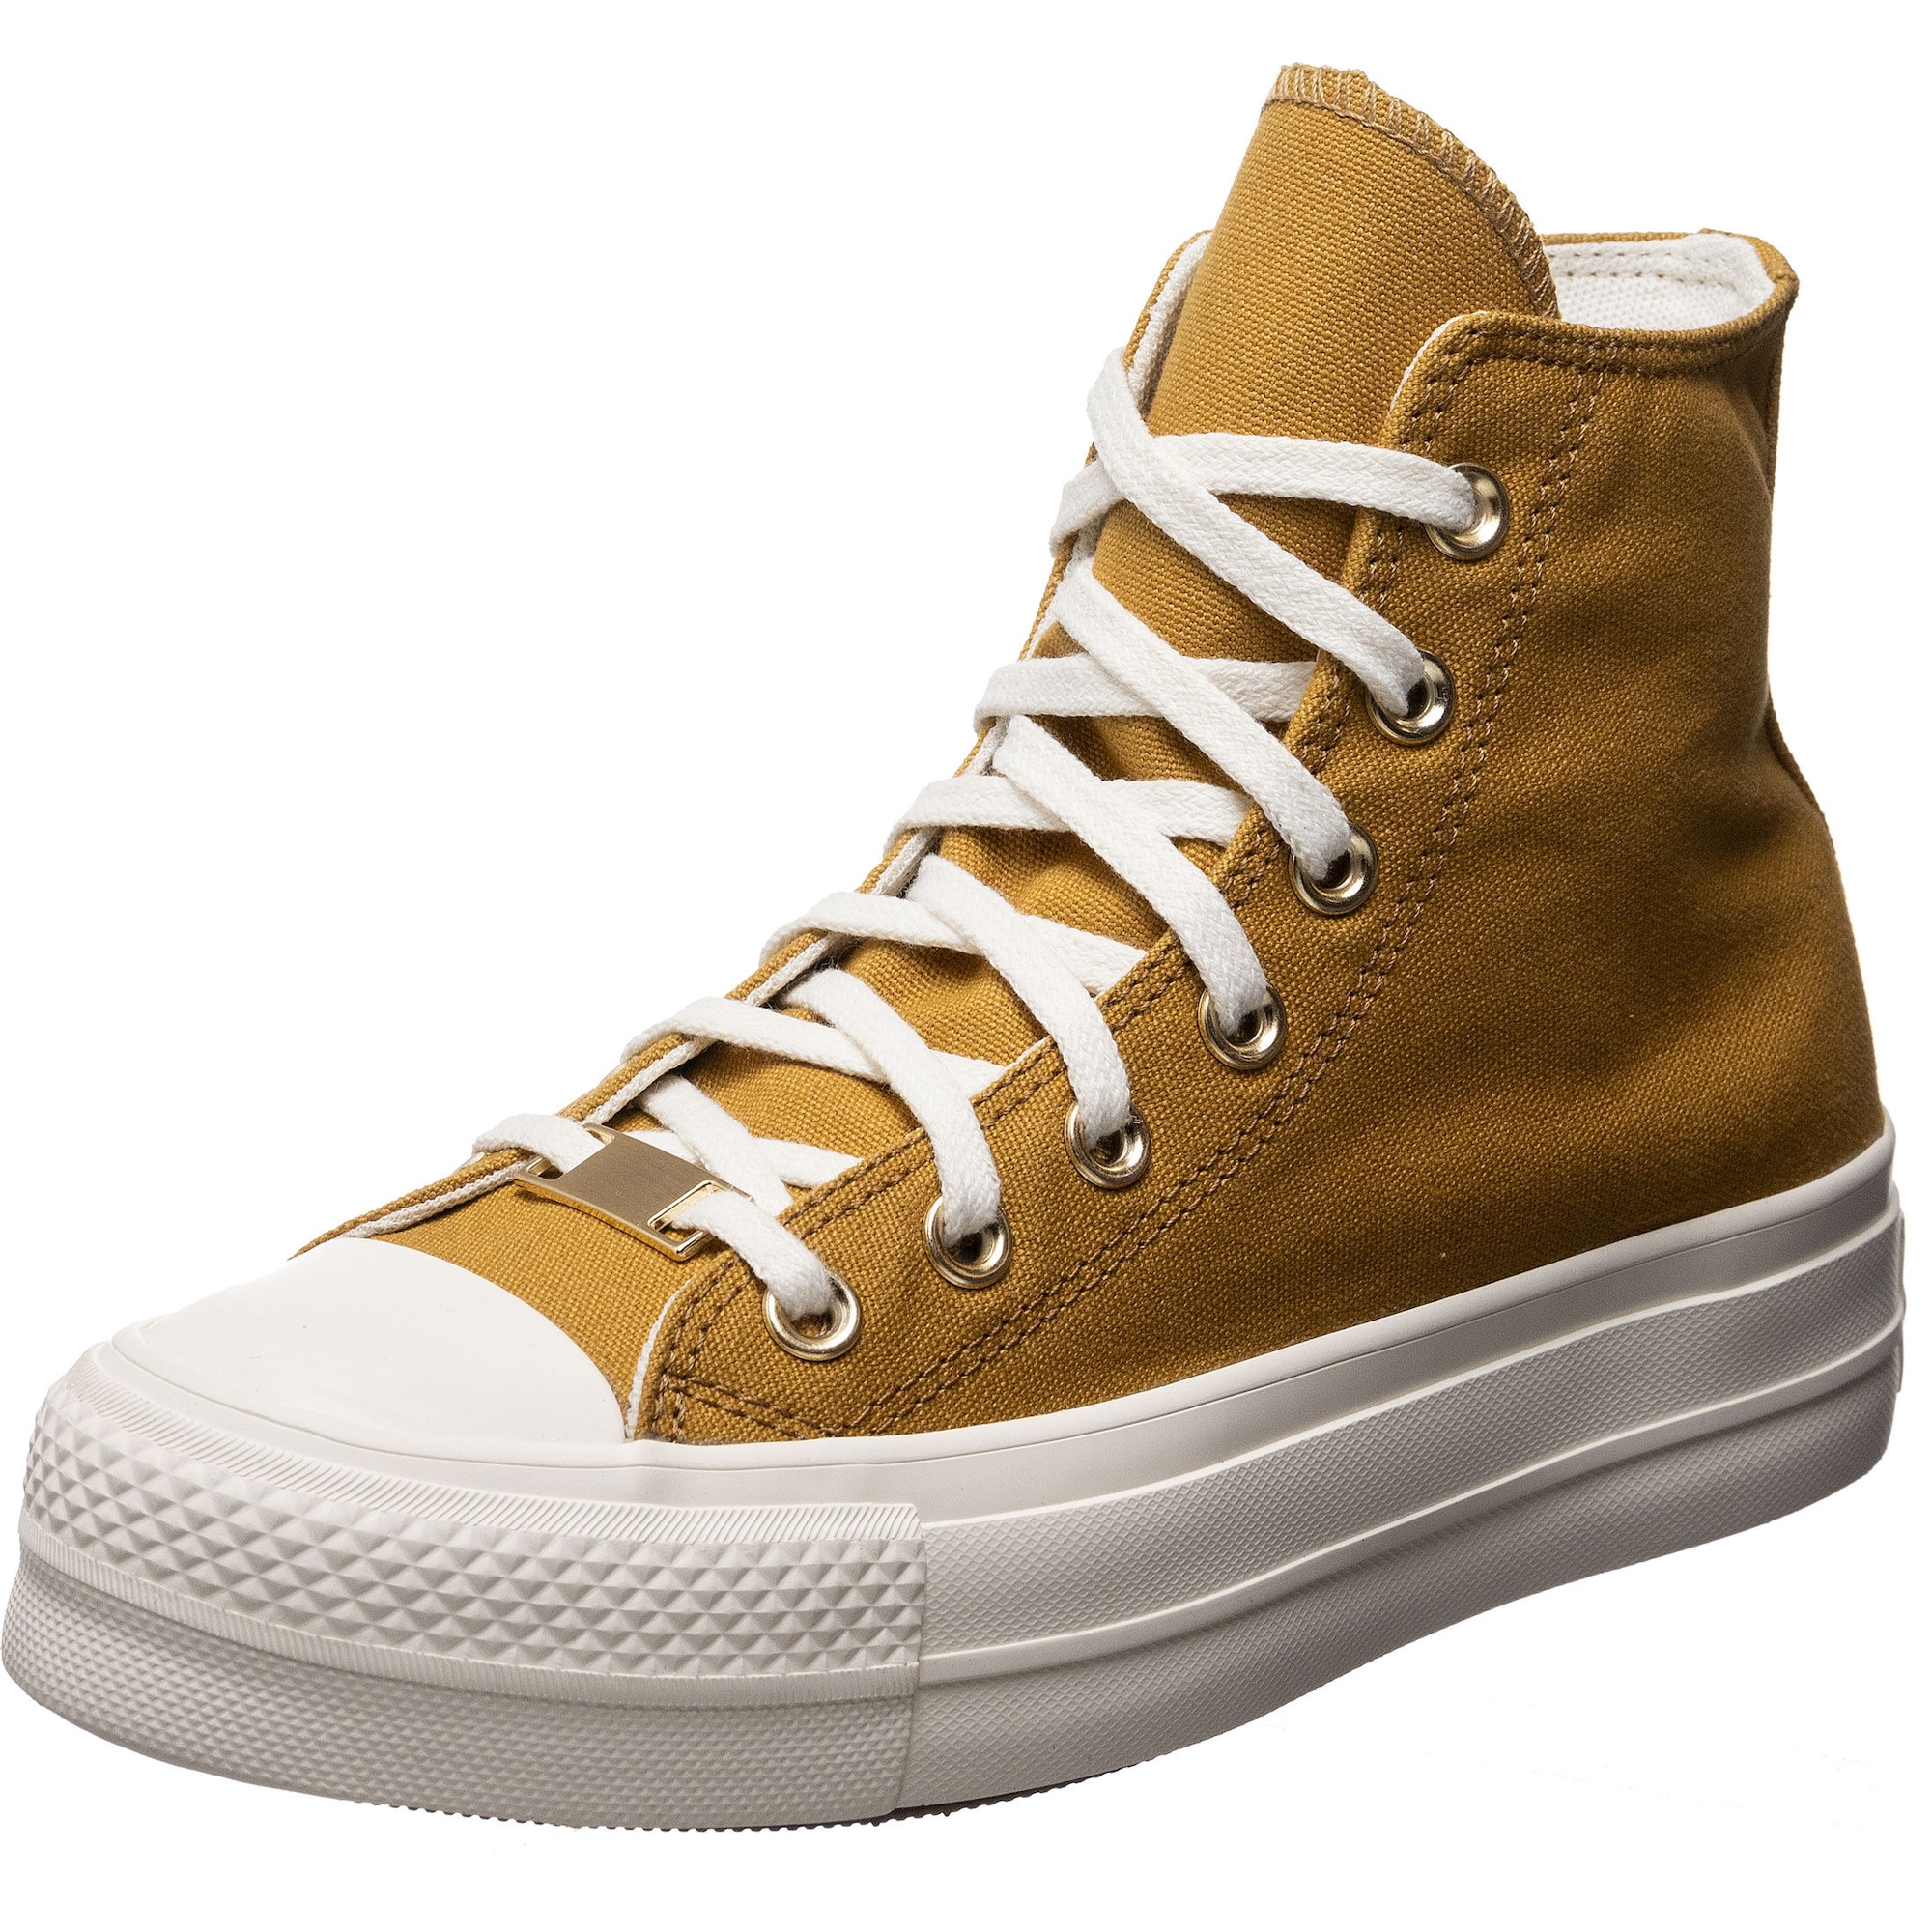 Converse CONVERSE Sneaker 'Chuck Taylor' beige